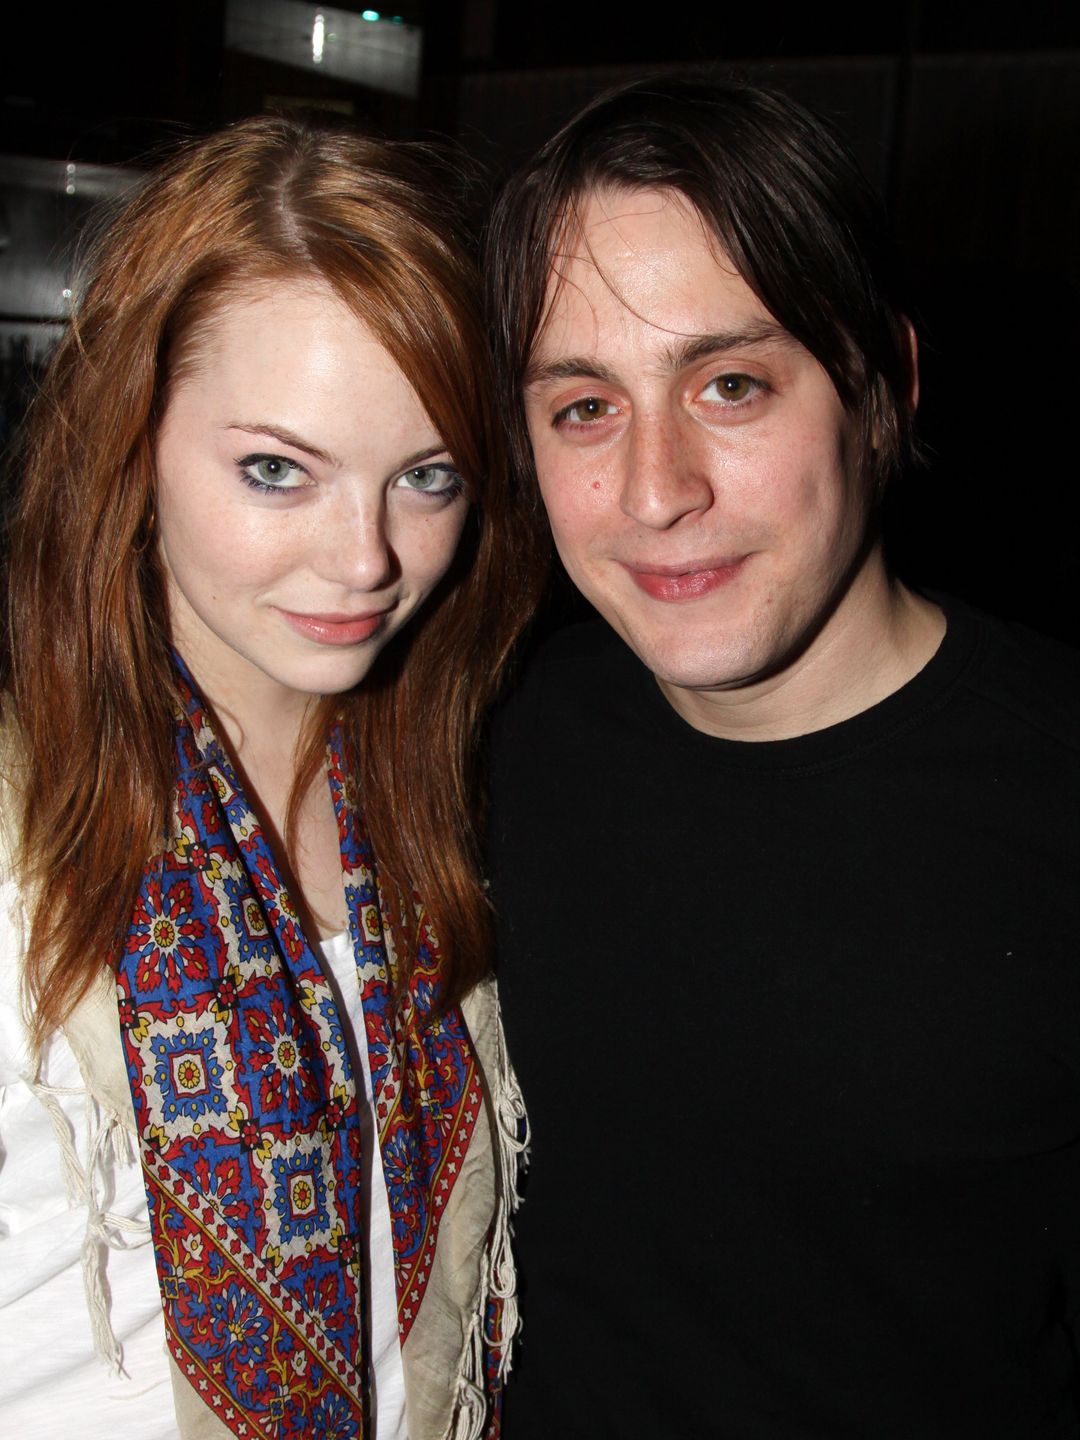 Emma Stone and Kieran Culkin in 2009